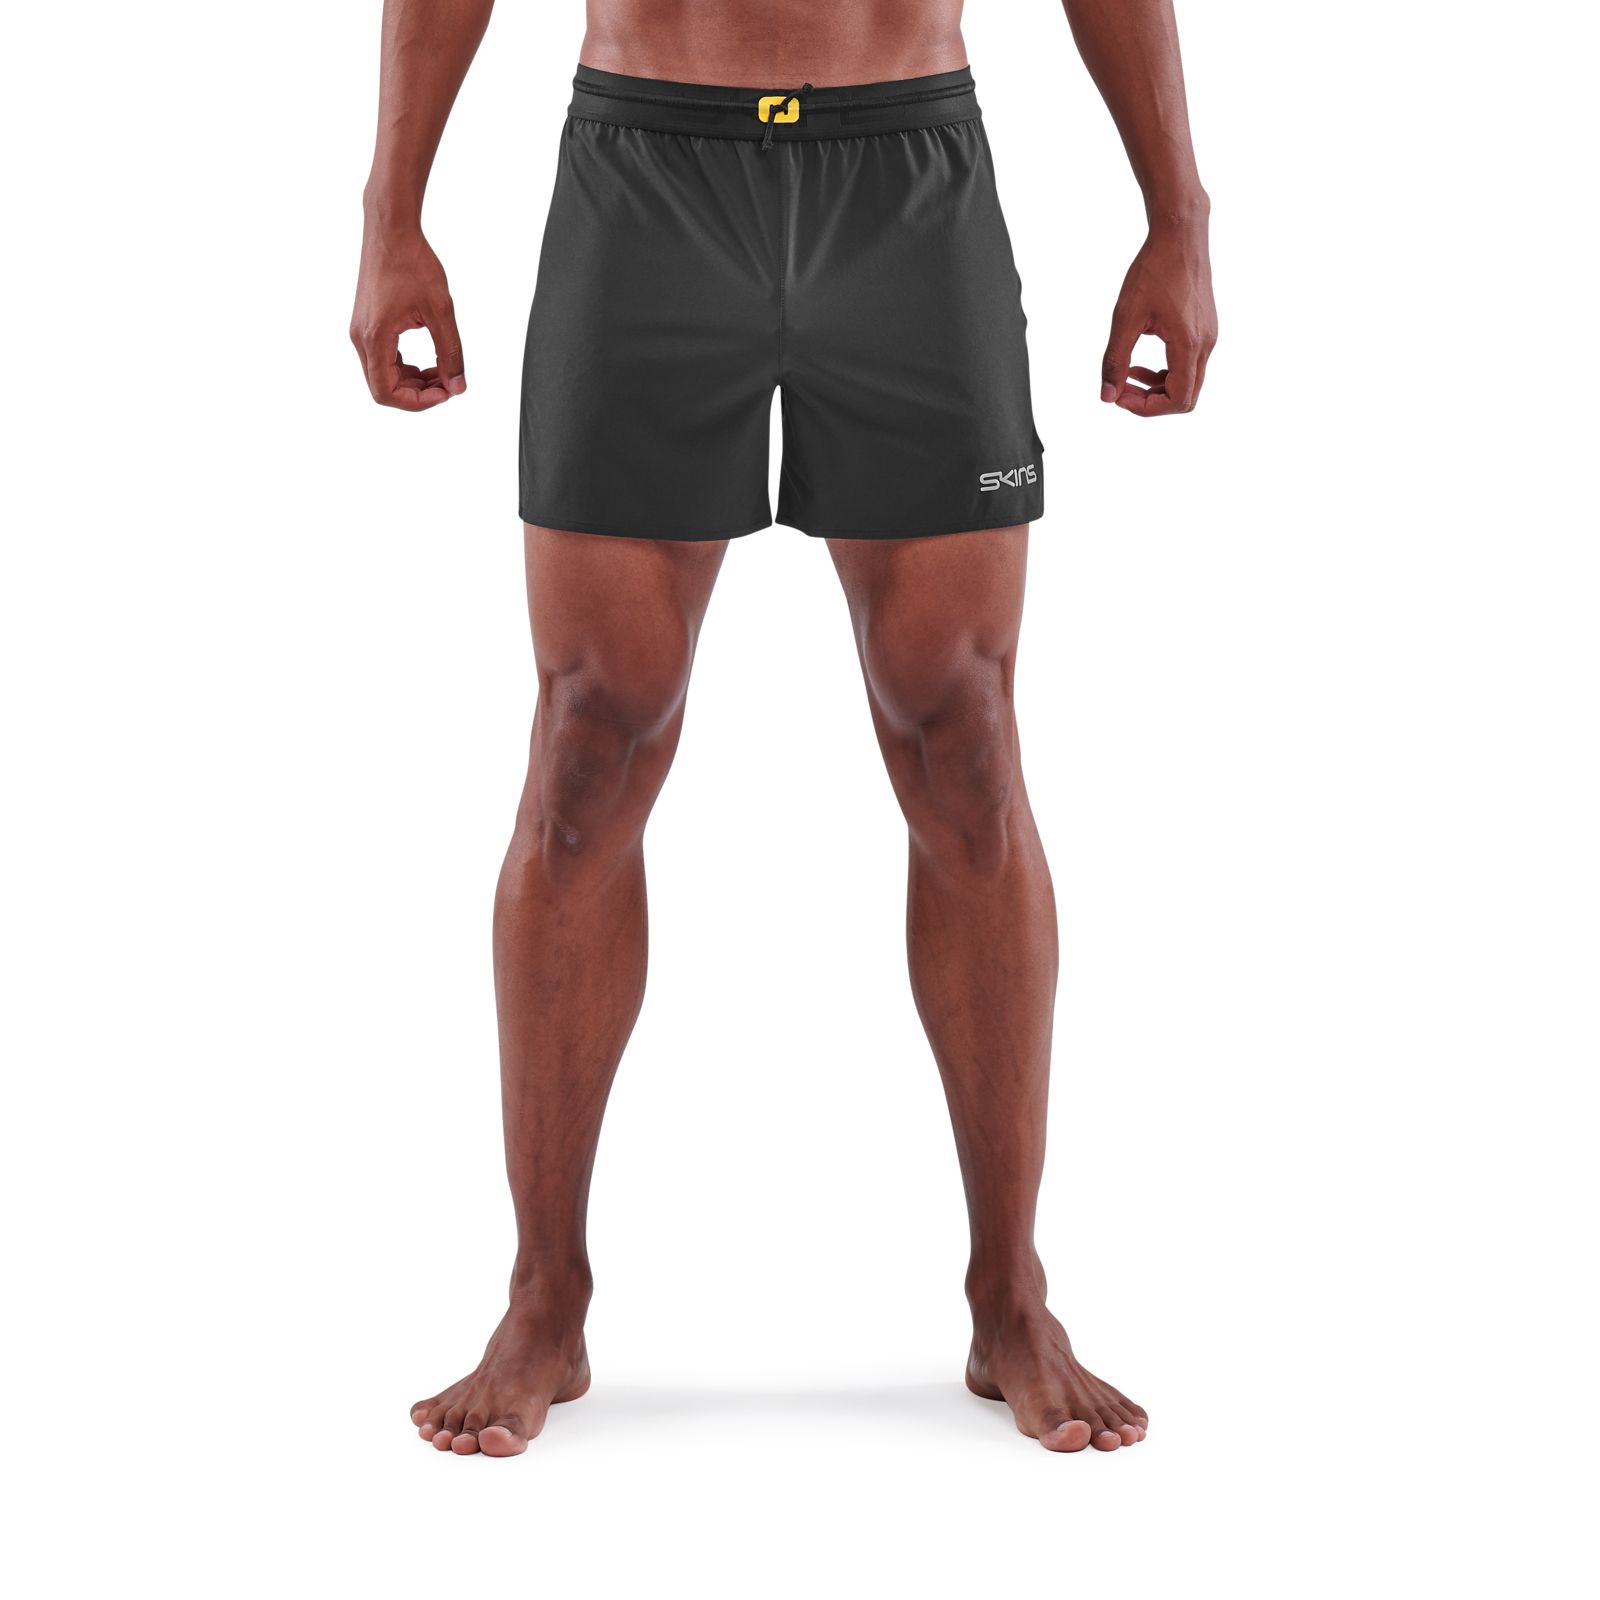 Buy Run Compression Shorts 3.0 men online